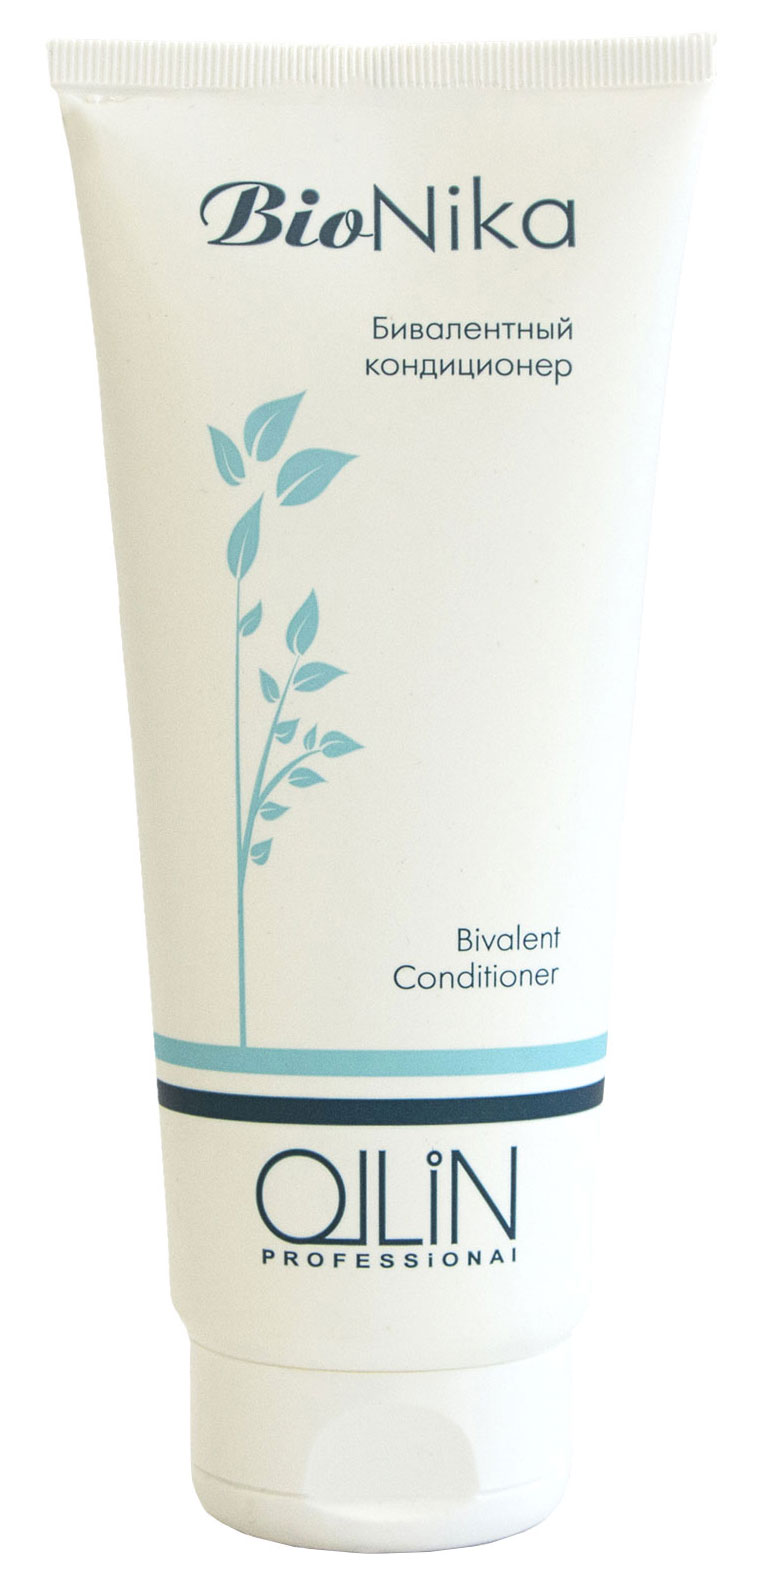 Кондиционер для волос Ollin Professional BioNika Bivalent 200 мл кондиционер стабилизатор рн 3 5 сonditioner stabilizer ph 3 5 ollin service line 393528 5000 мл